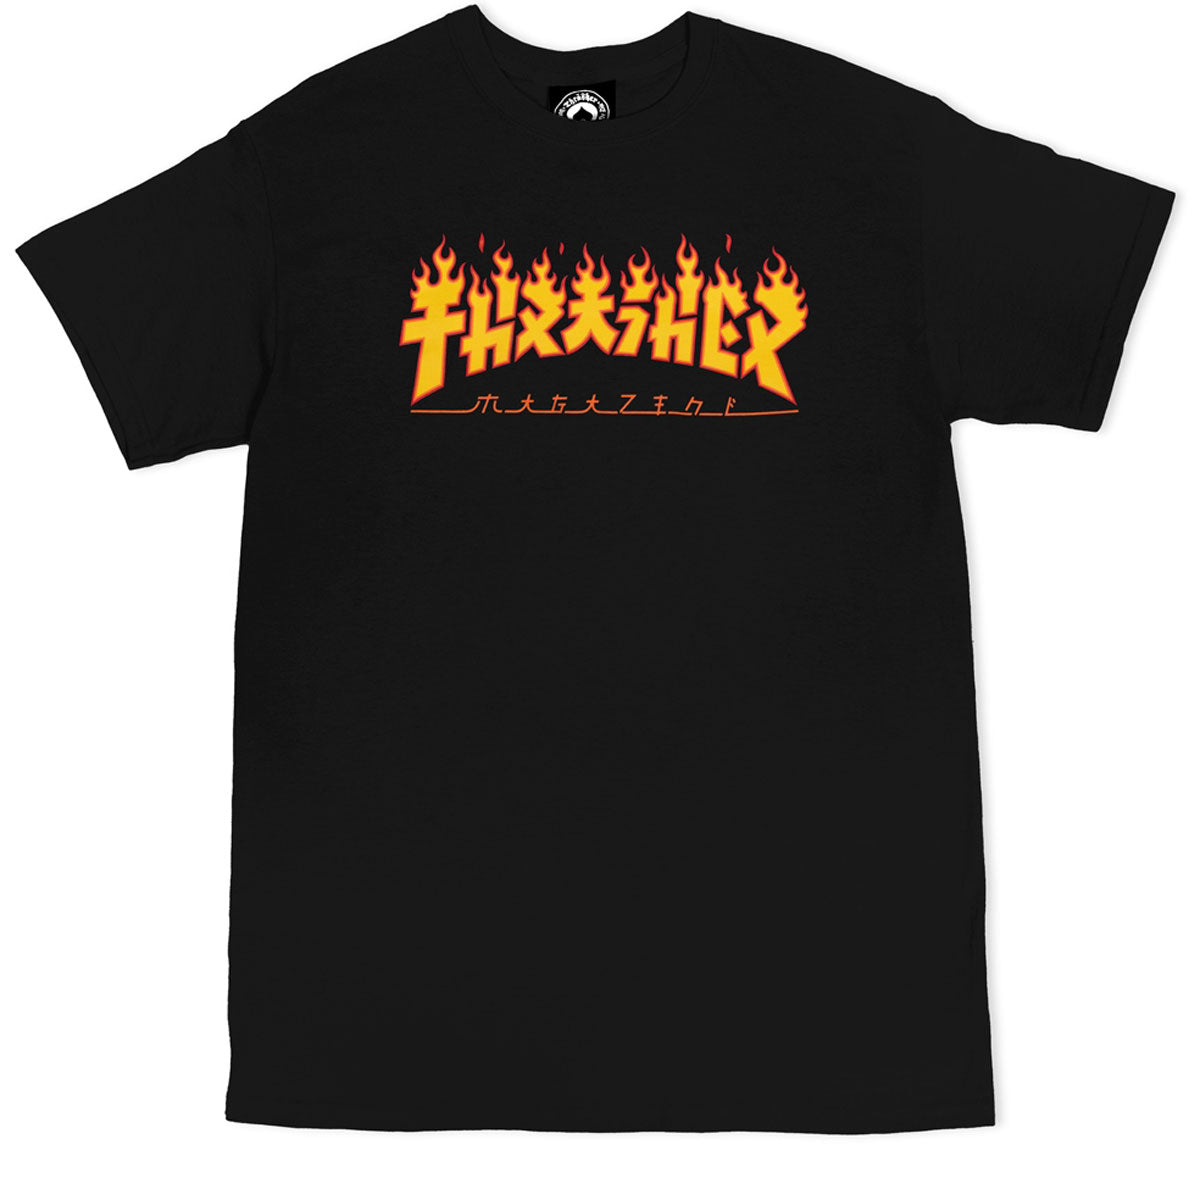 Thrasher Godzilla Flame T-Shirt - Black image 1